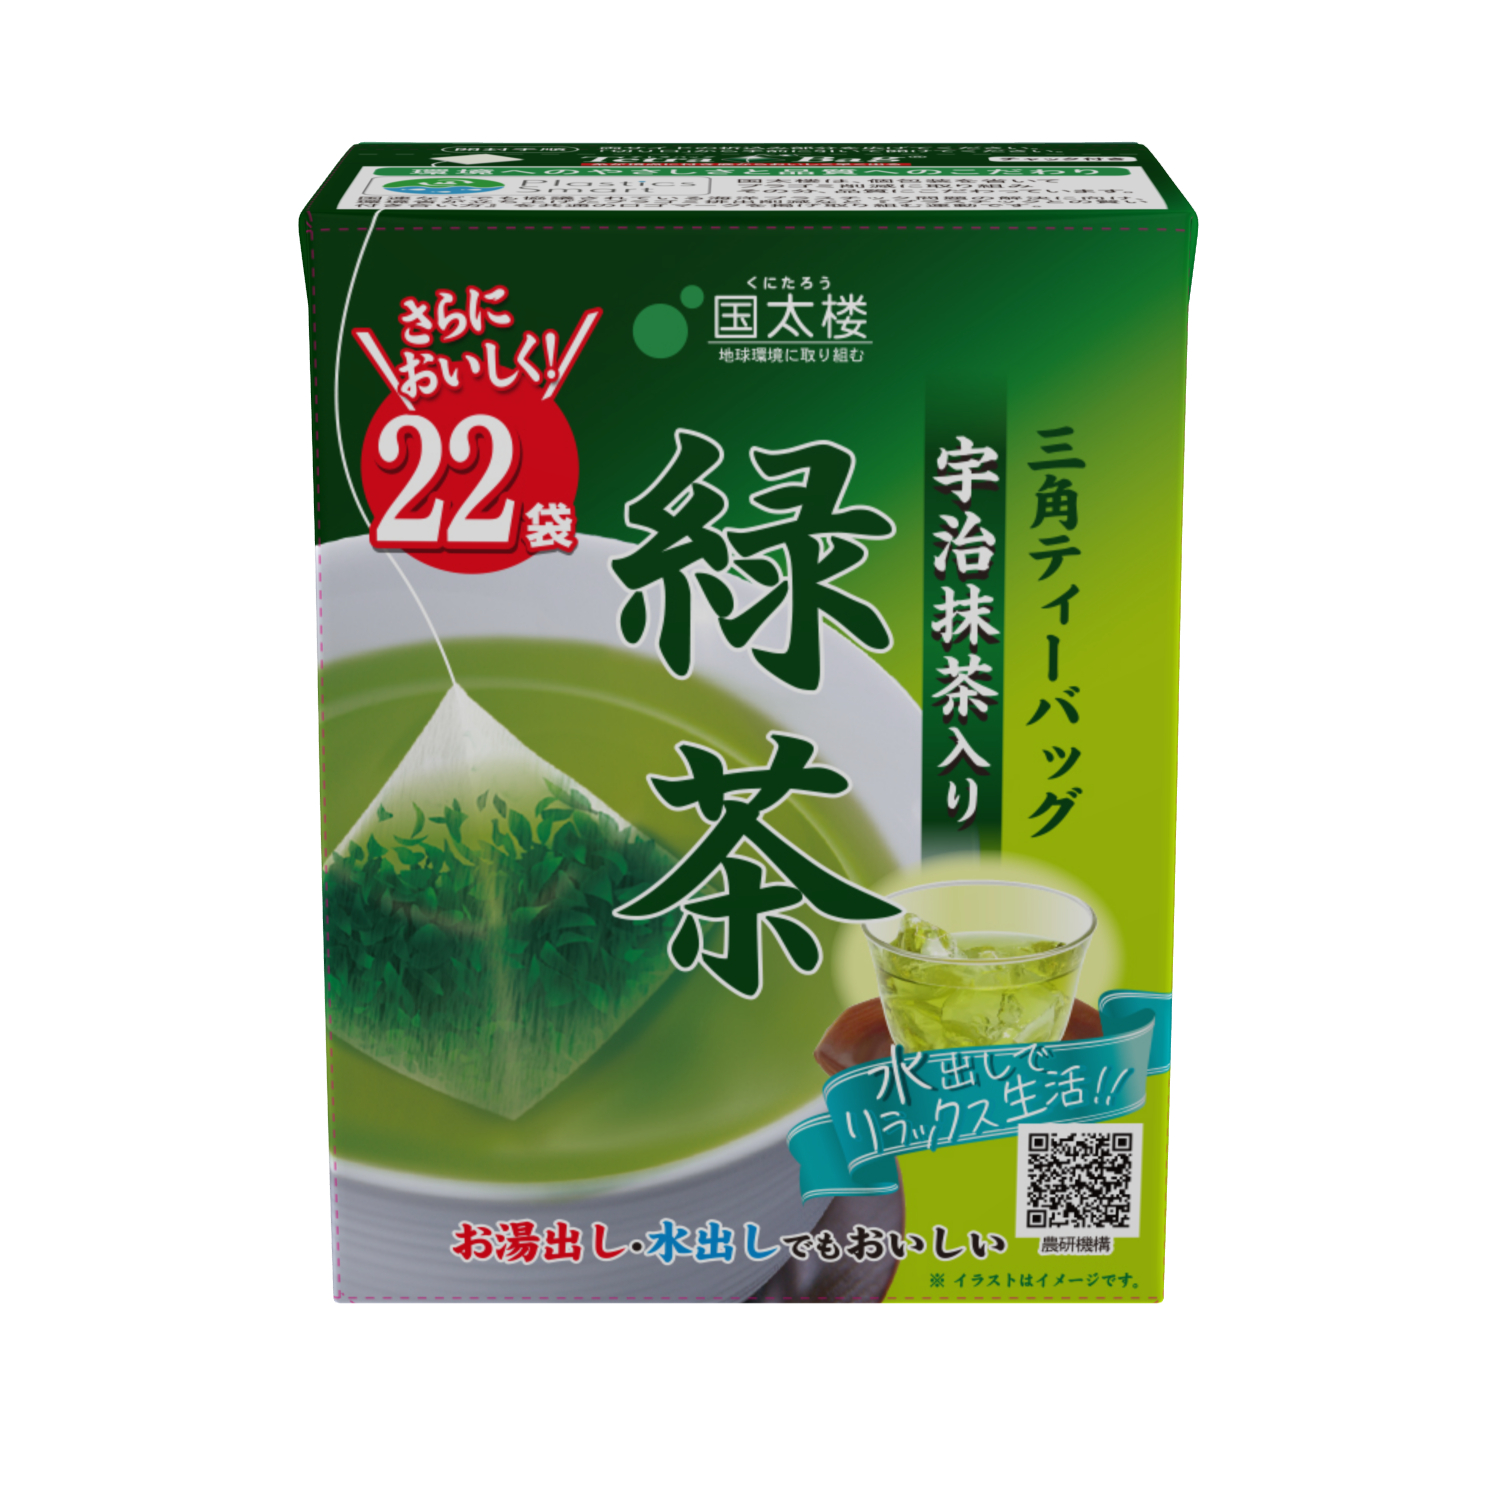 Green Tea with Uji Matcha Tetra Bag 22p｜Kunitaro of tea and coffee